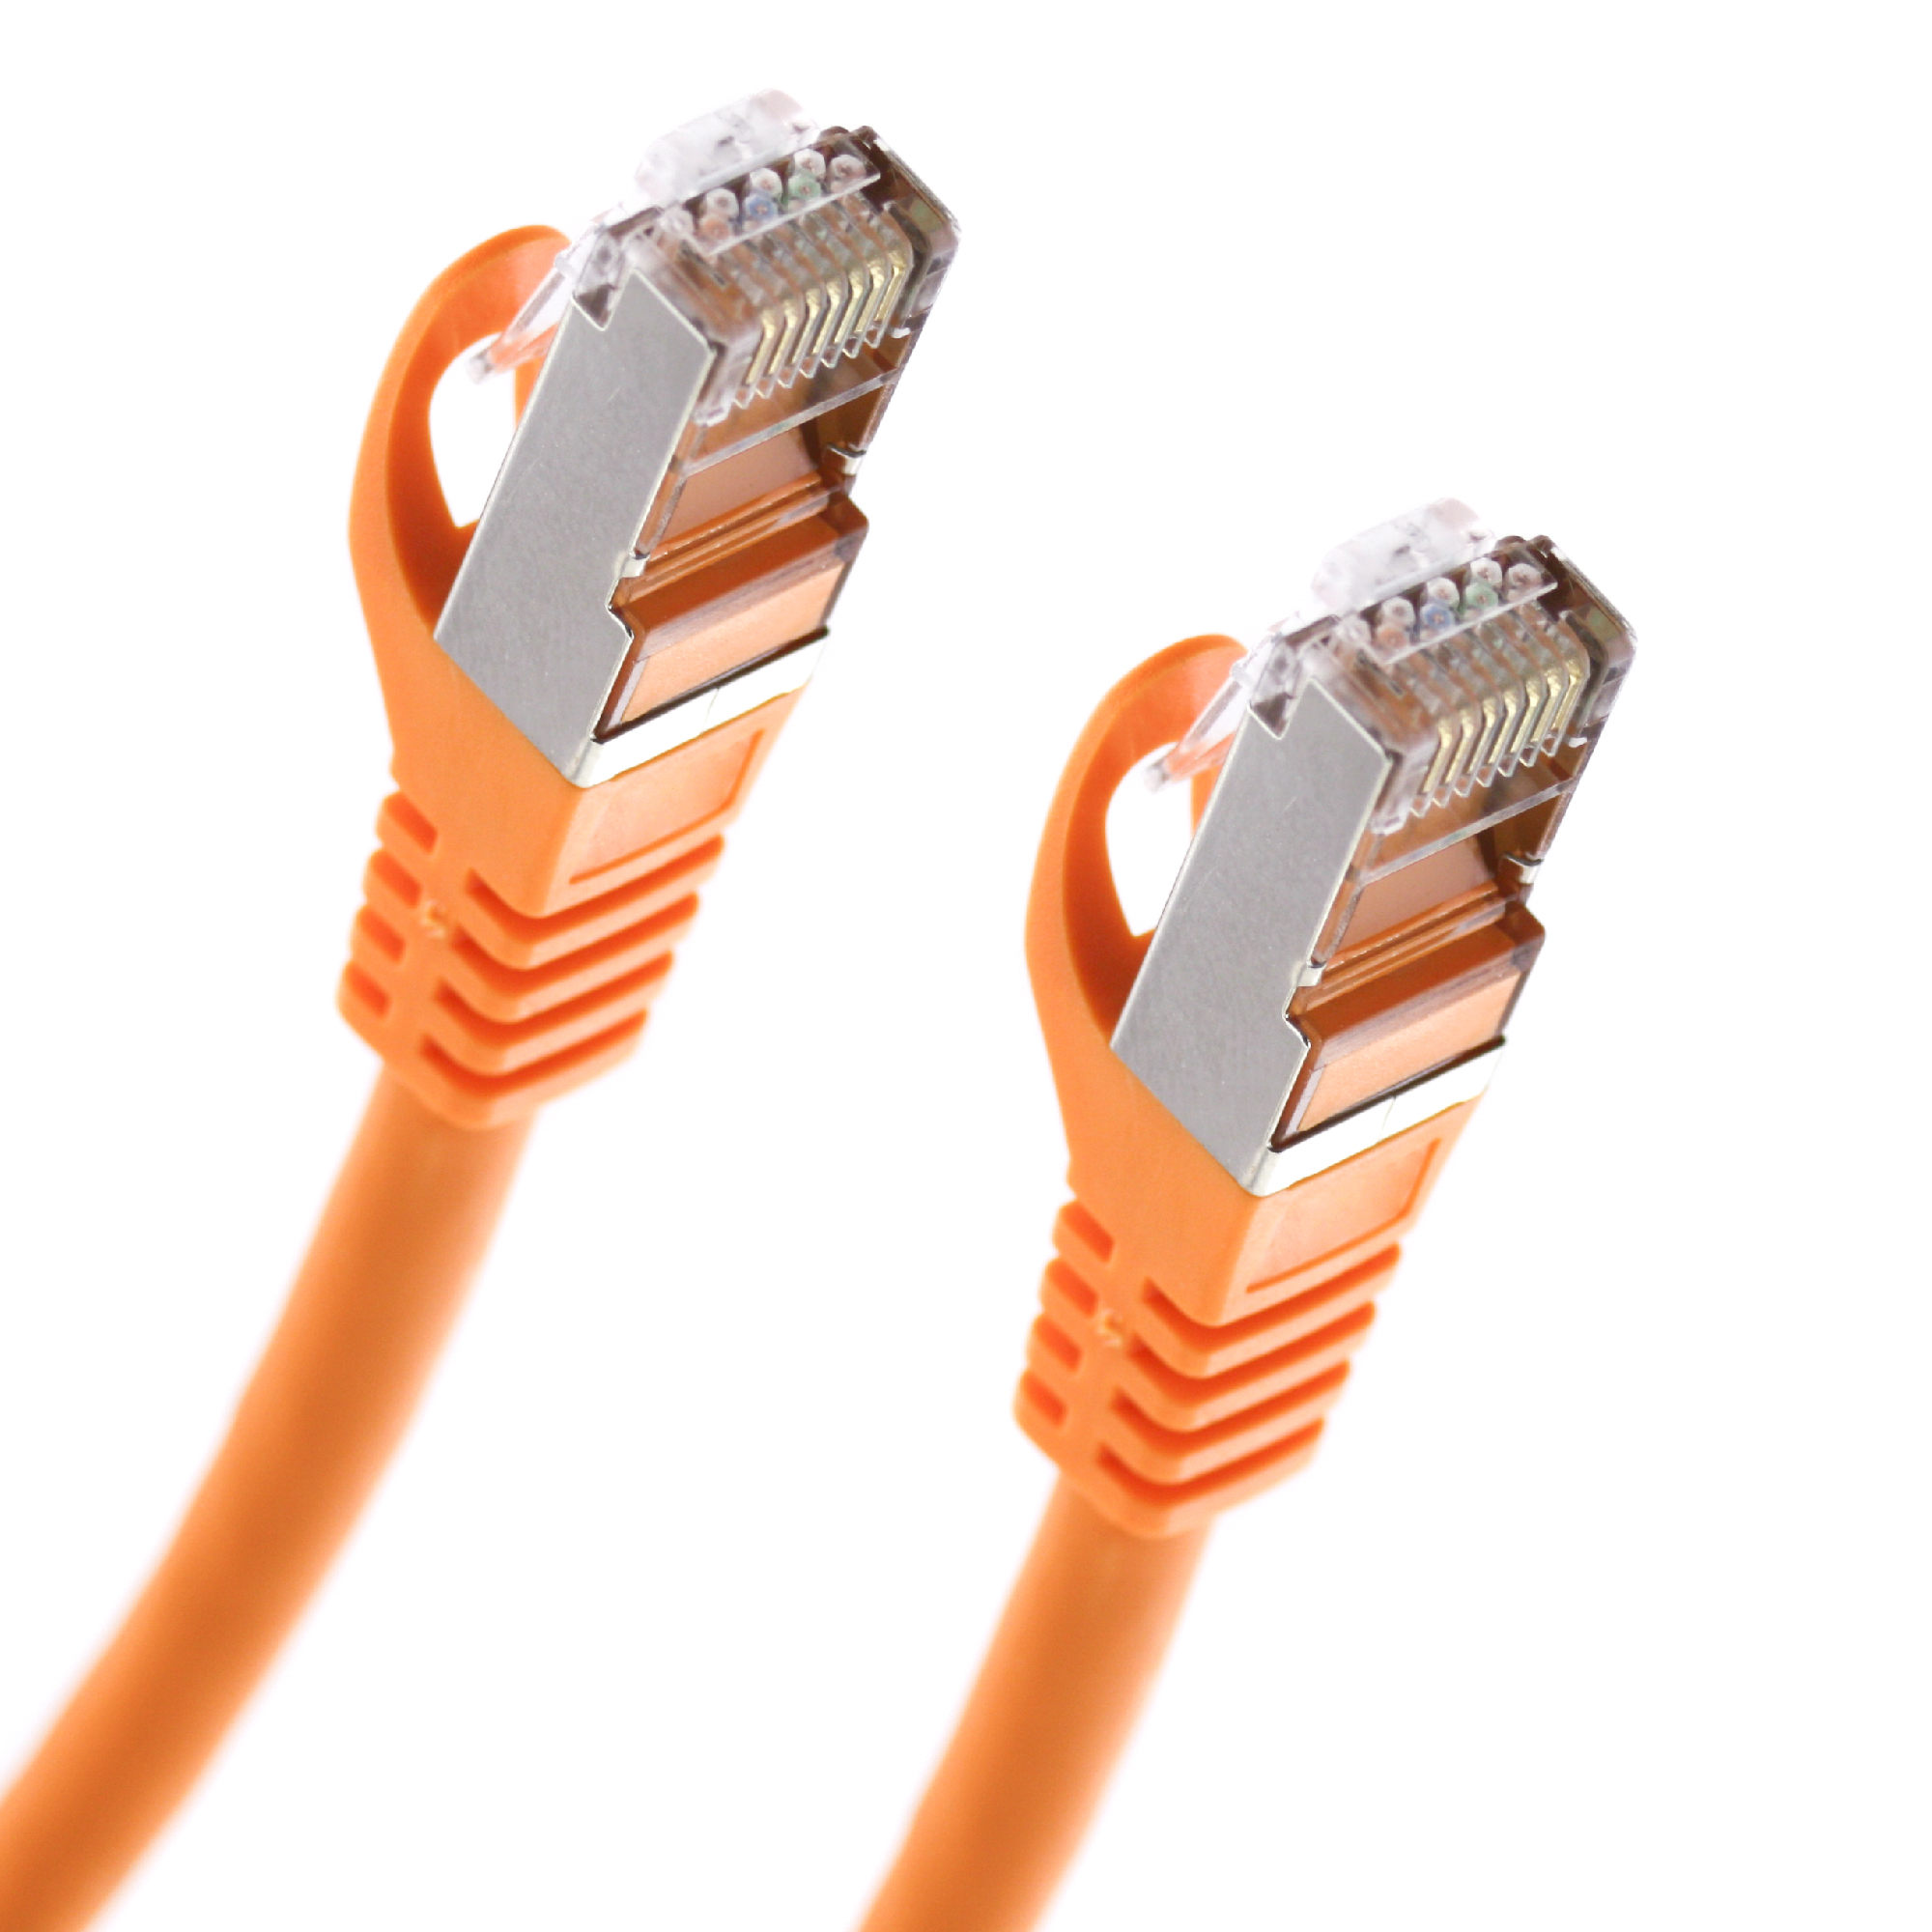 Network cable Cat. 7 S/FTP PIMF 0.50 meter orange